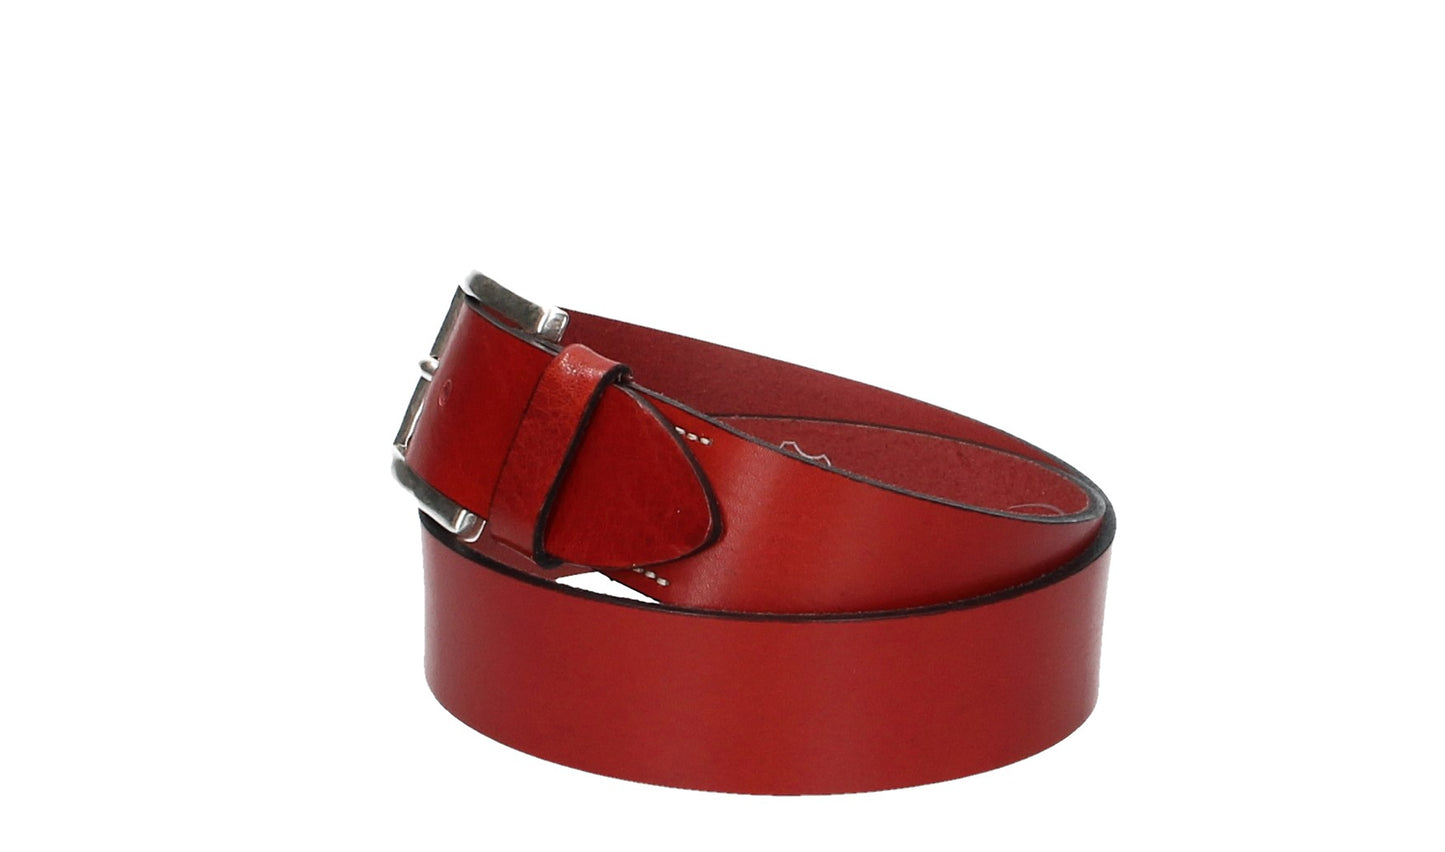 Hochwertiger Ledergürtel 40mm in Rot mit rustikaler Schließe in Silber